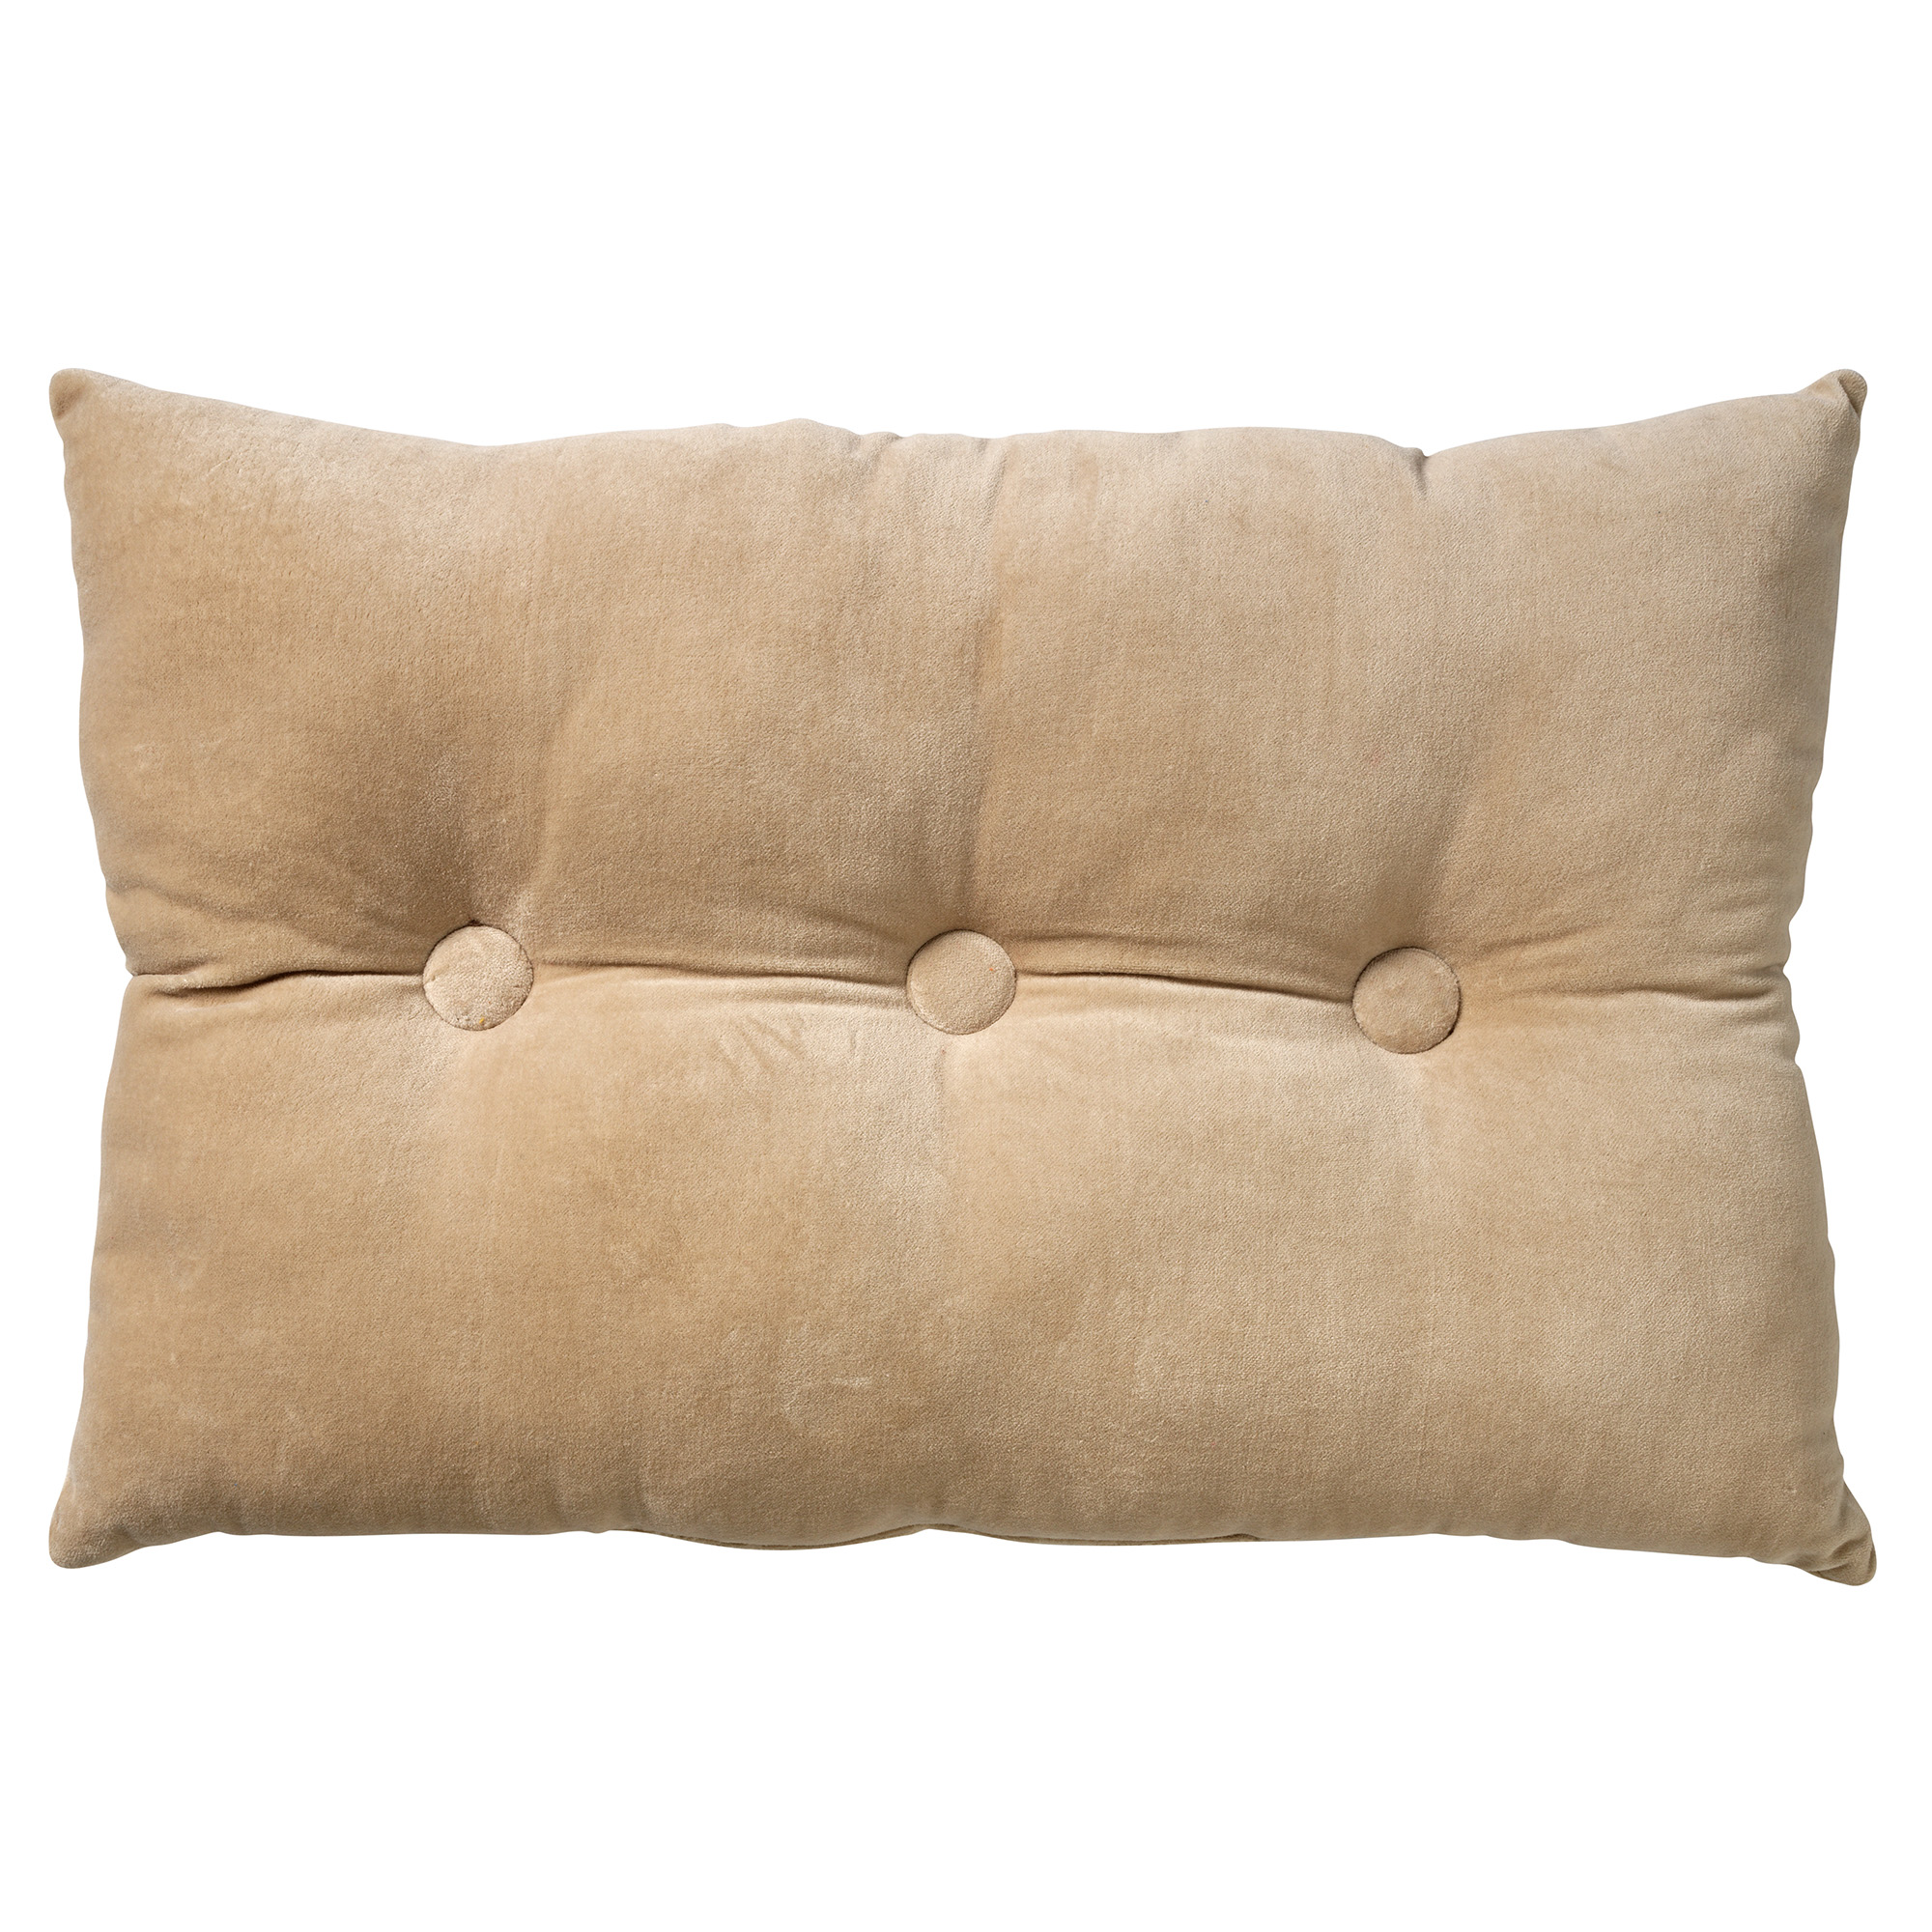 VALERIE - Cushion 40x60 cm Pumice Stone - beige